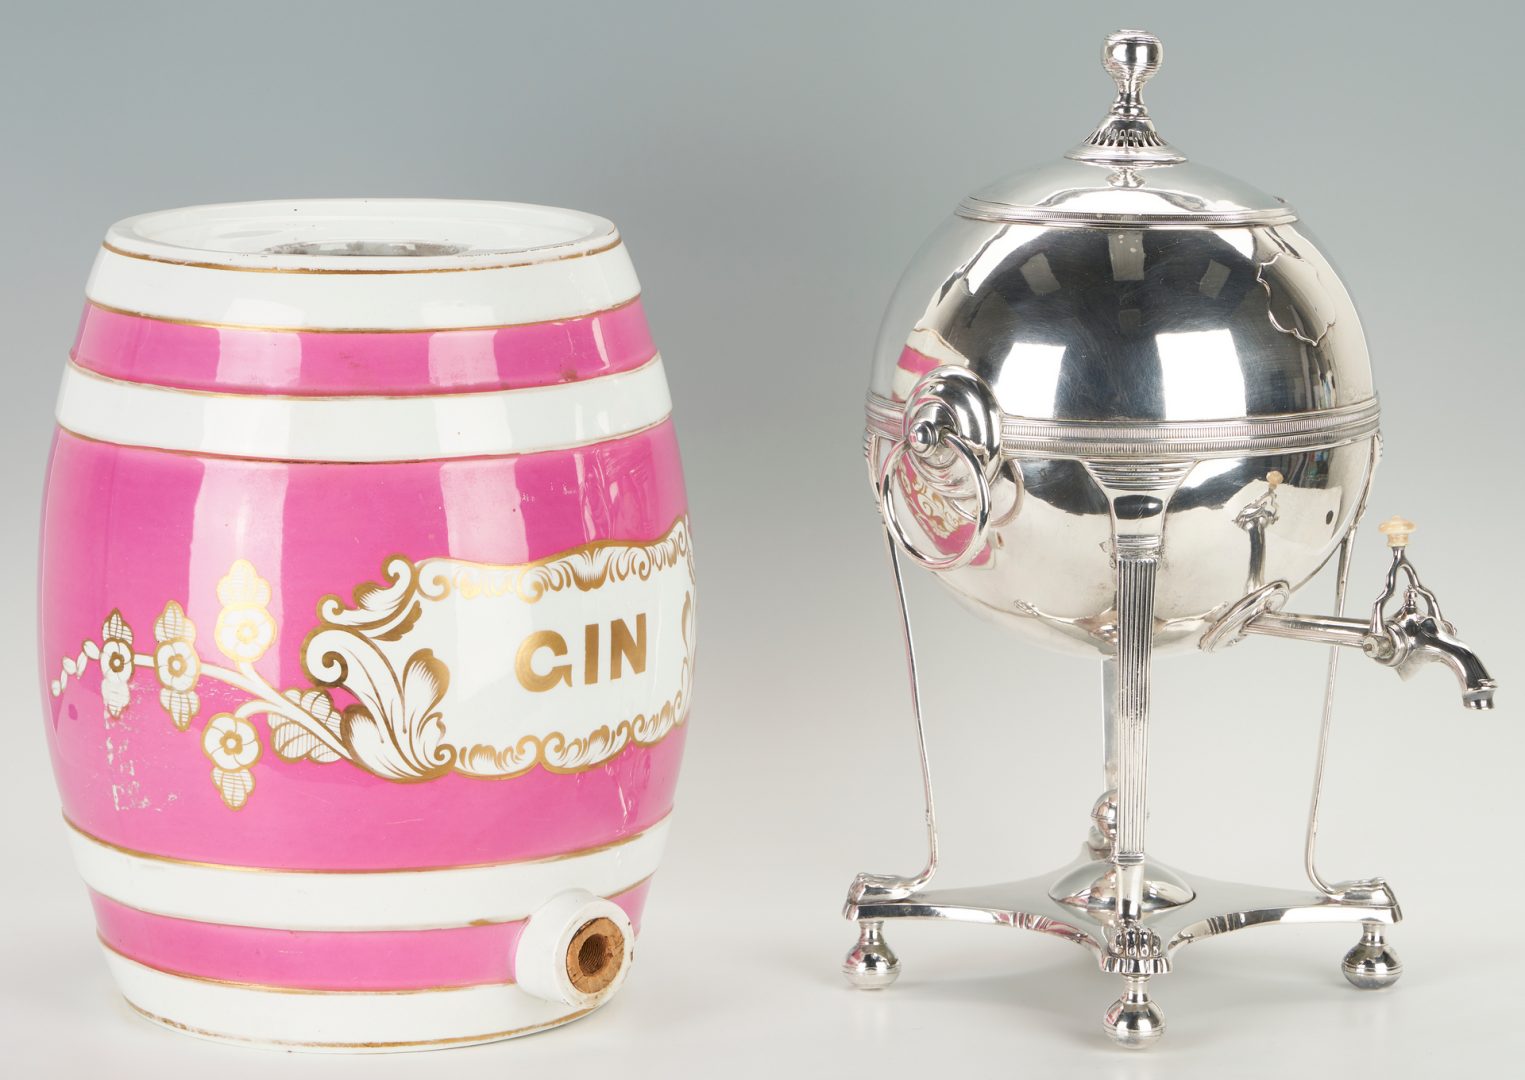 Lot 584: English Porcelain Gin Barrel & Silverplated Urn, 2 items